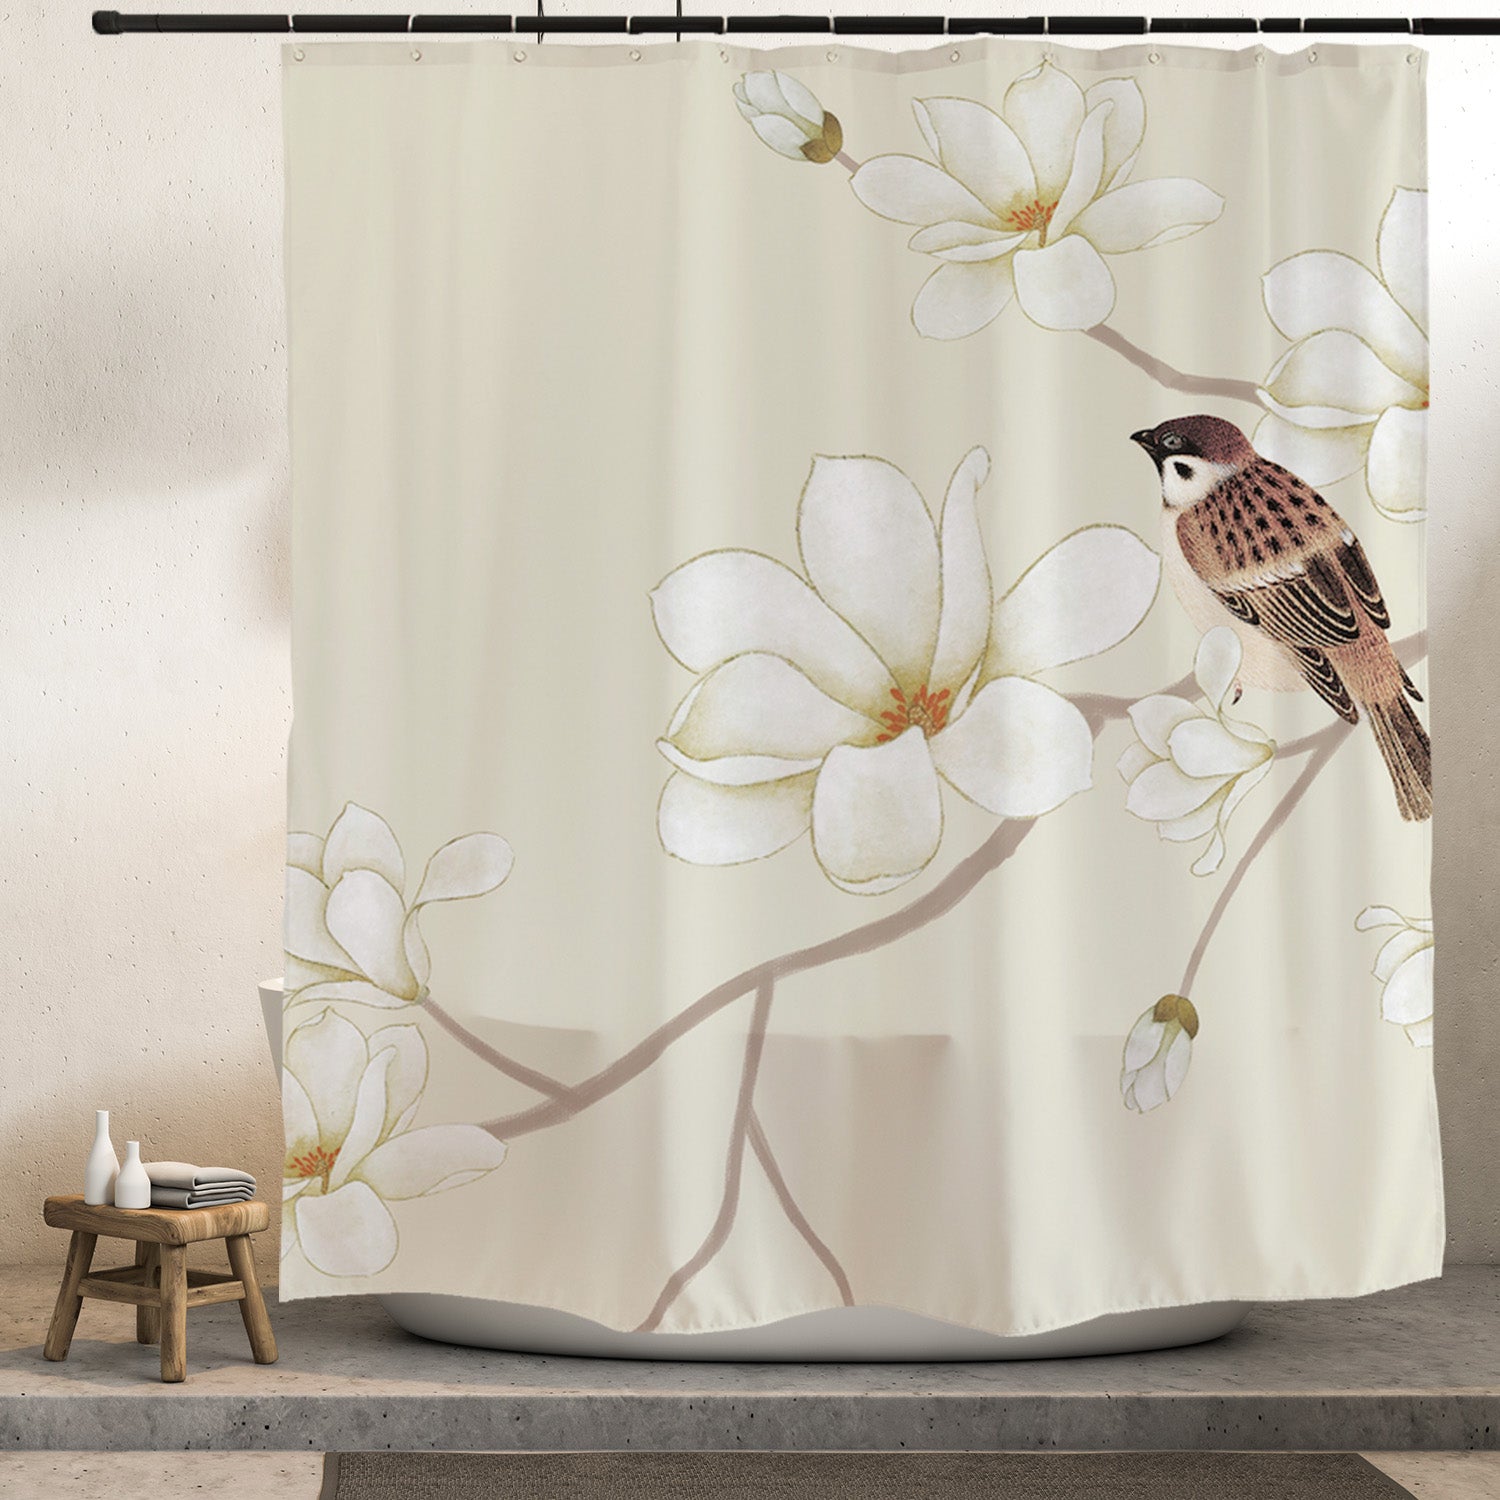 Feblilac Sparrow Magnolia Flower Shower Curtain with Hooks